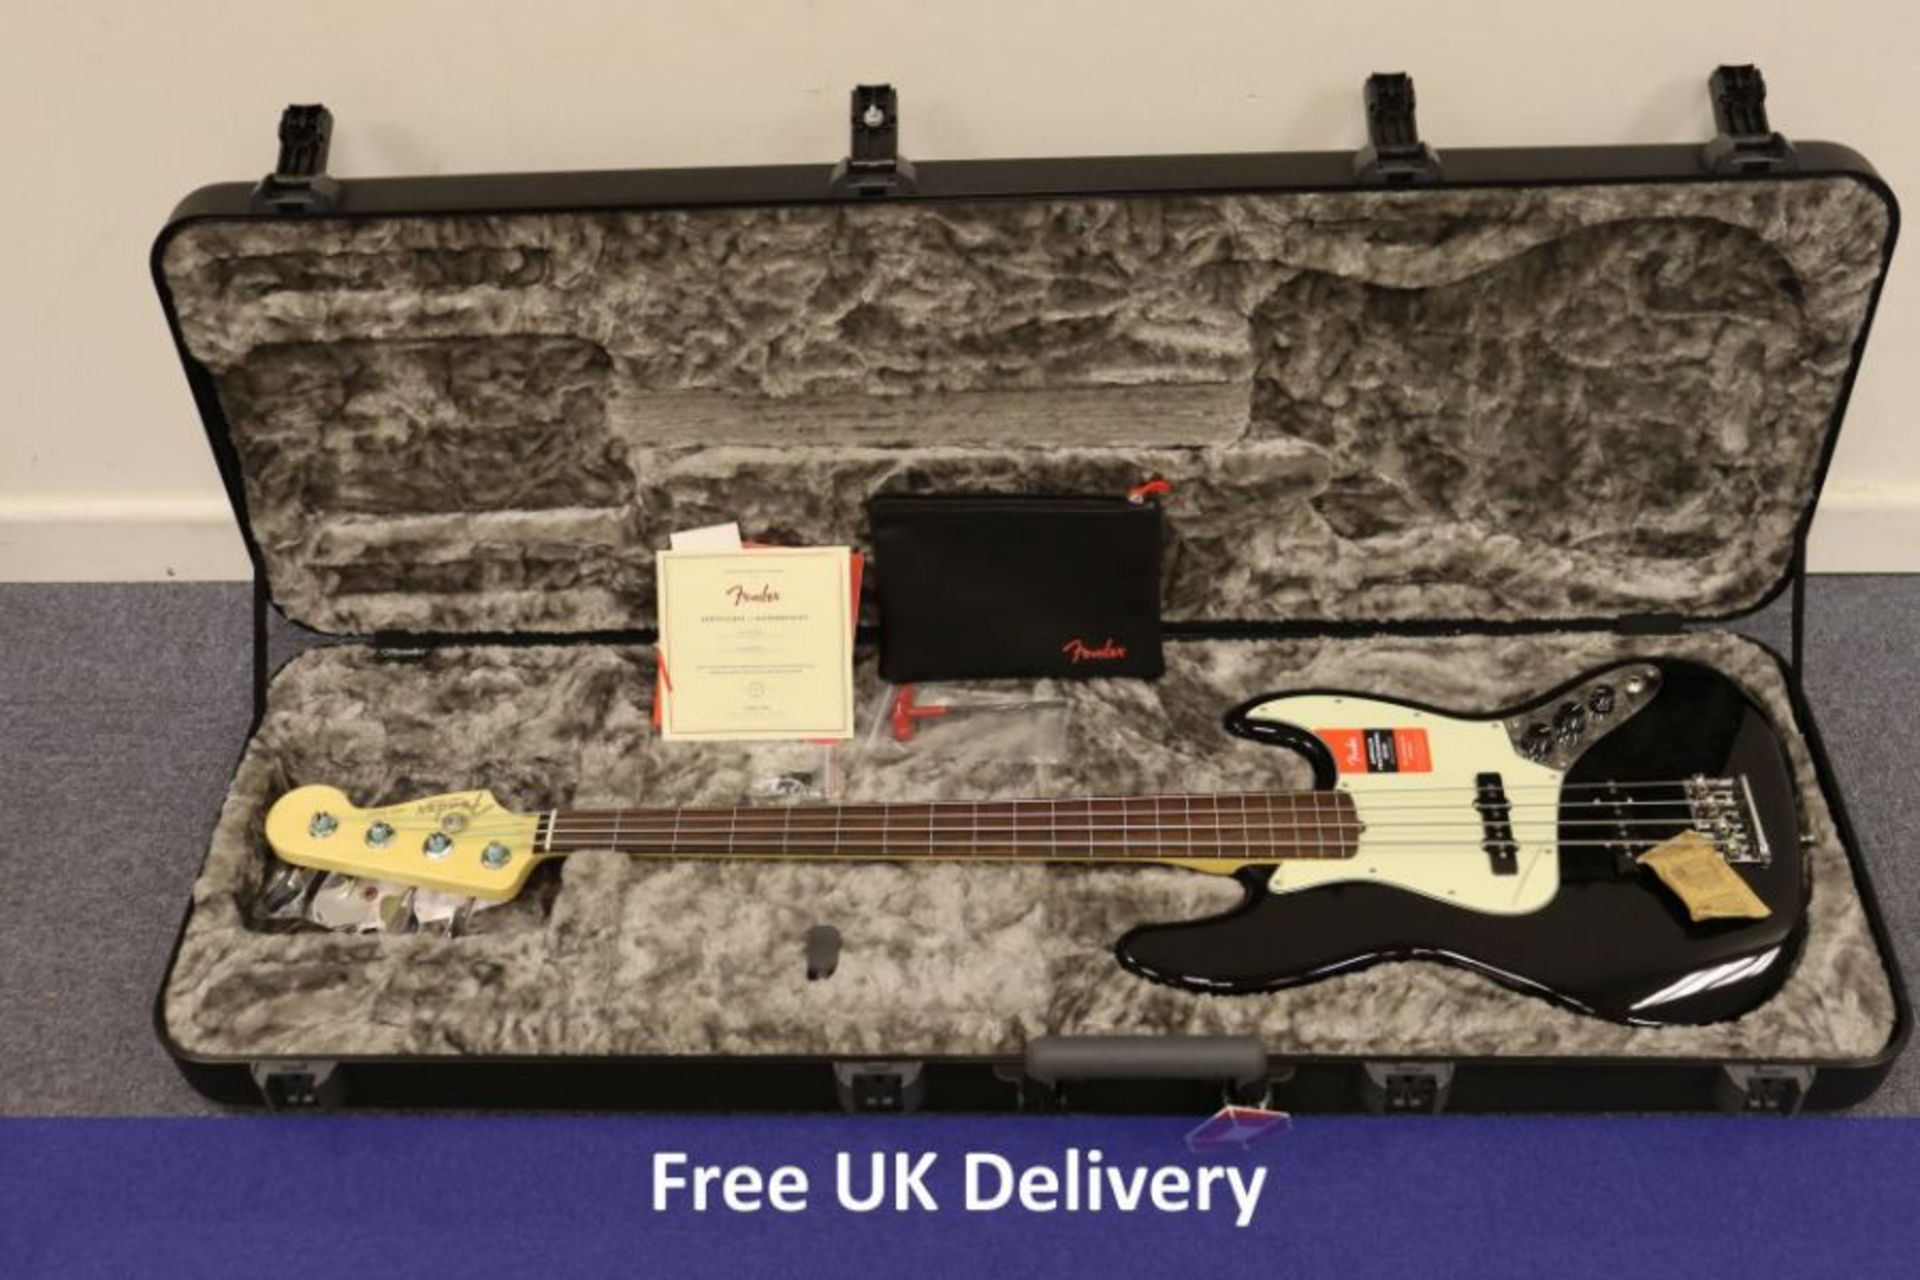 Fender American Professional Jazz Bass Guitar in Deluxe Moulded Fender Hard Case, Black, 0194100706